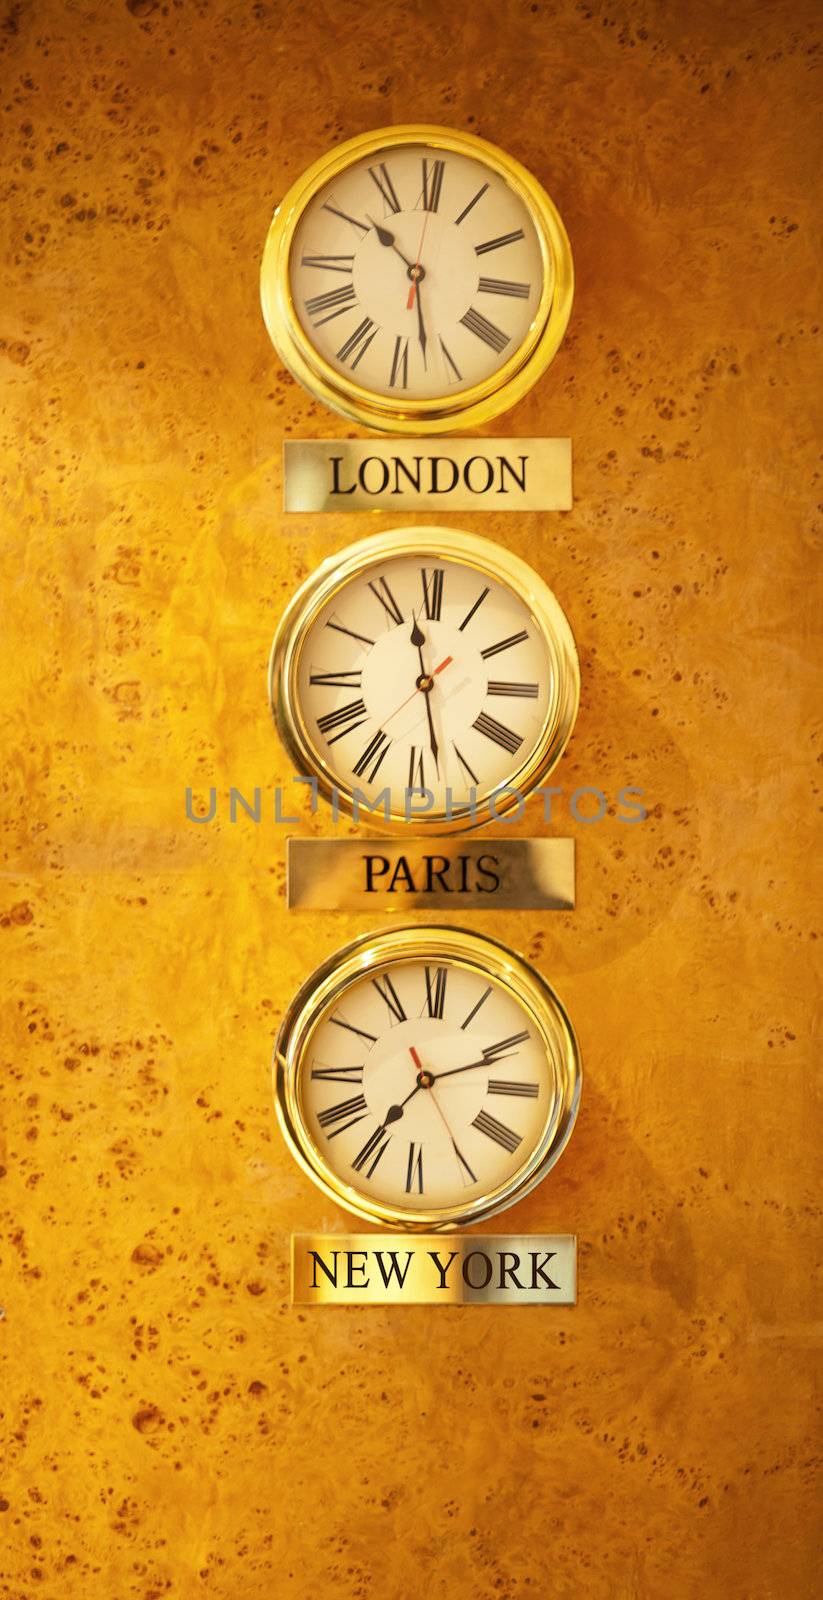 World clock at the reception wall. London, Paris and New York